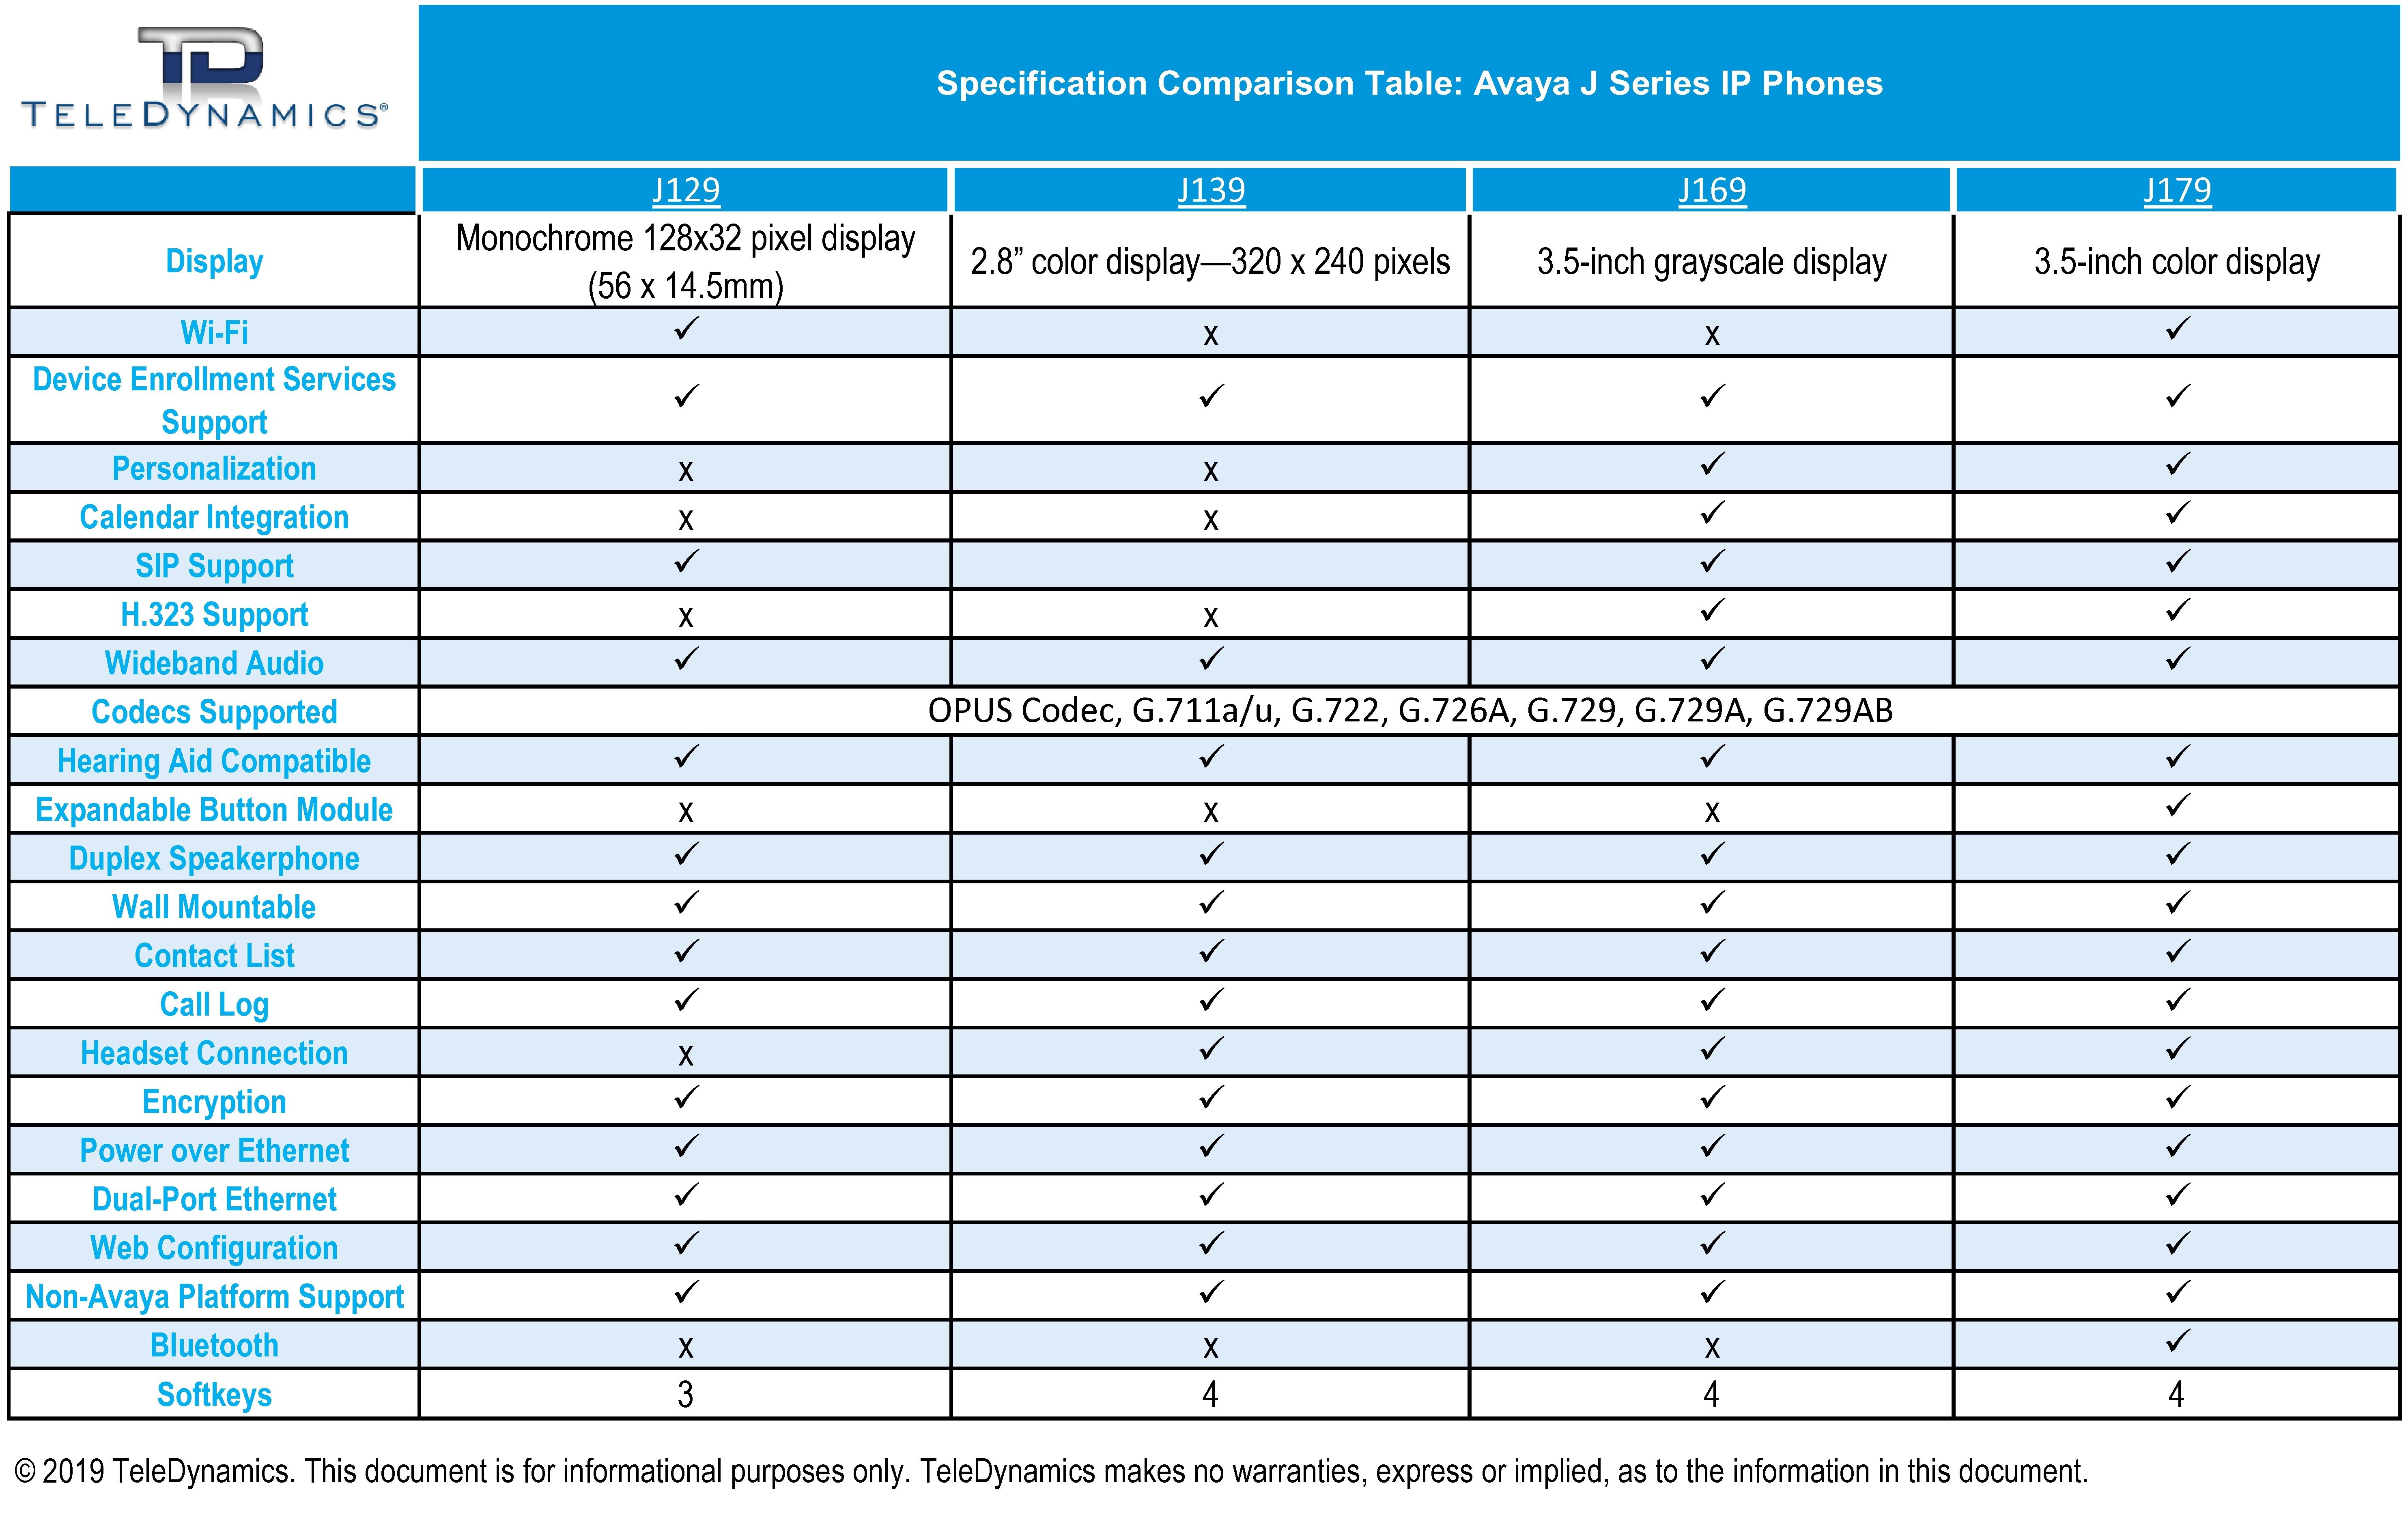 Avaya J series specification comparison table